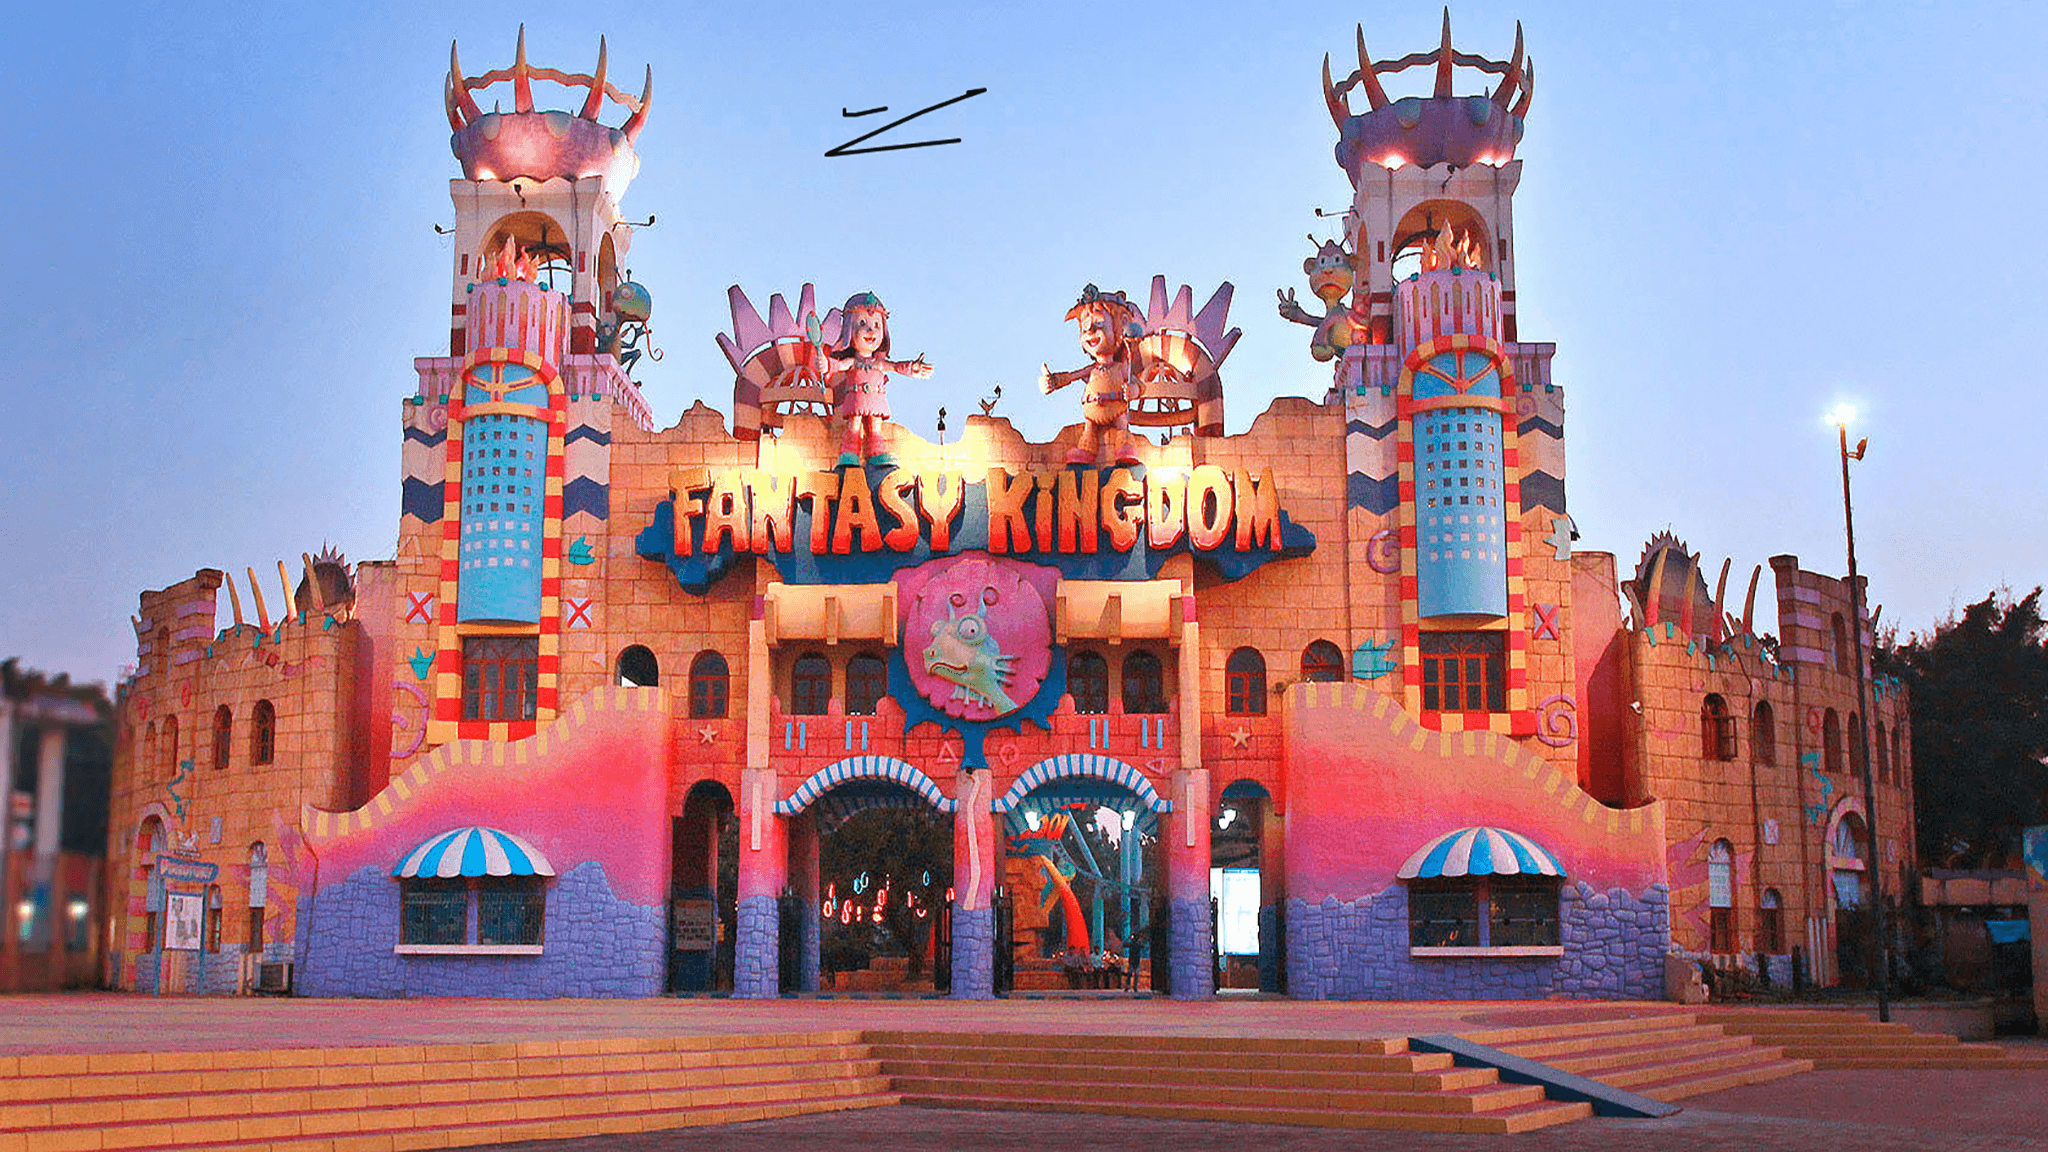 Fantasy Kingdom Front Gate Photo.png